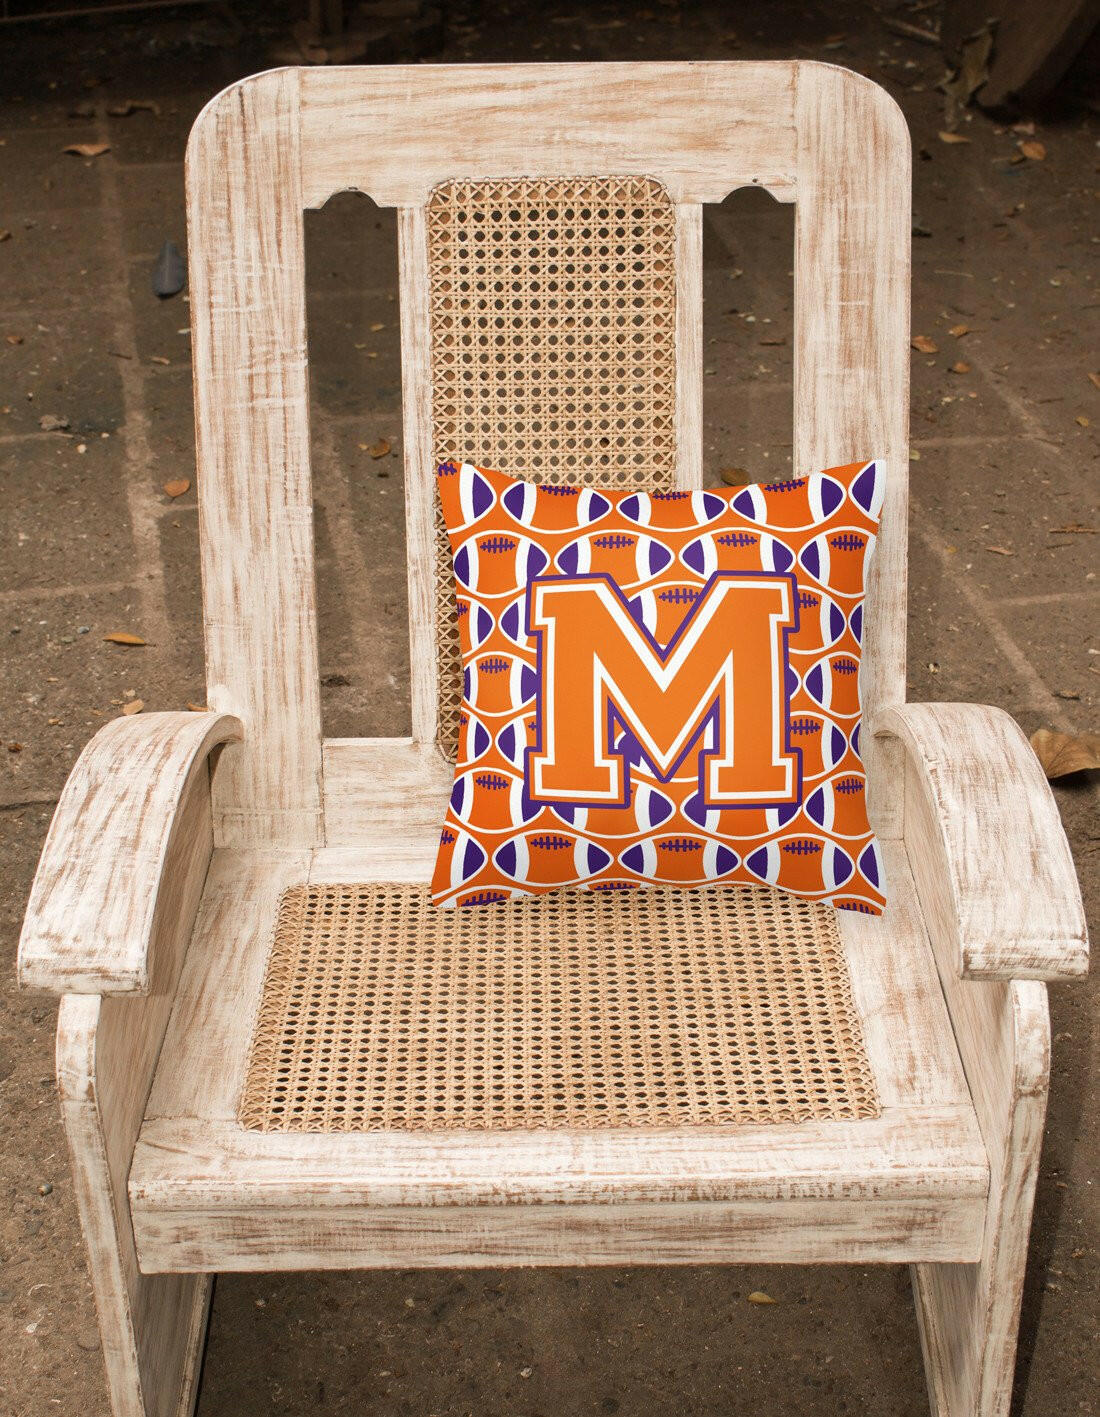 Letter M Football Orange, White and Regalia Fabric Decorative Pillow CJ1072-MPW1414 by Caroline's Treasures